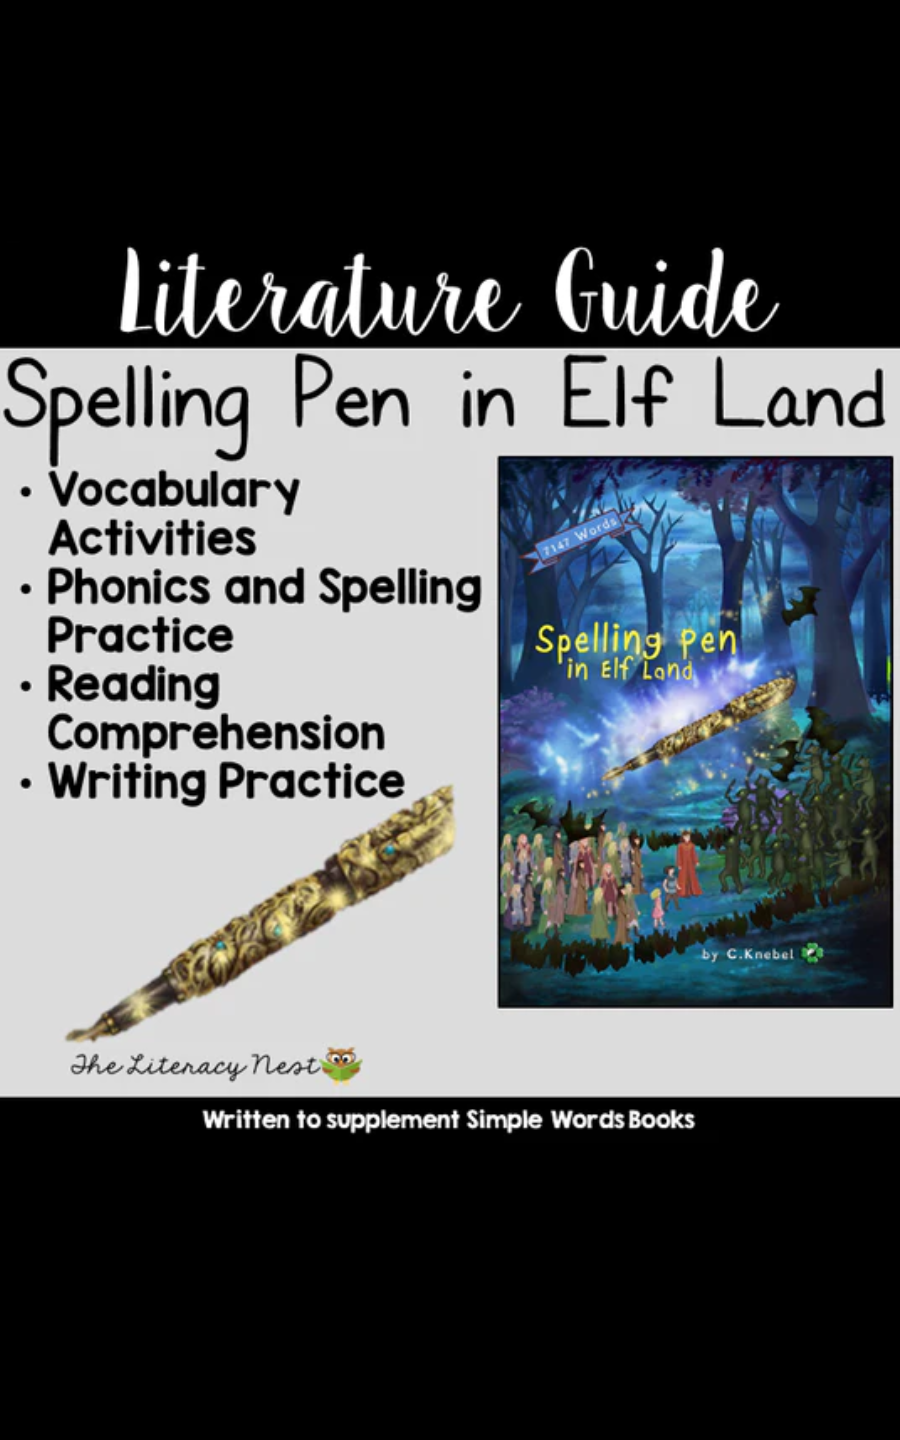 Literature Guide: Spelling Pen in Elf Land